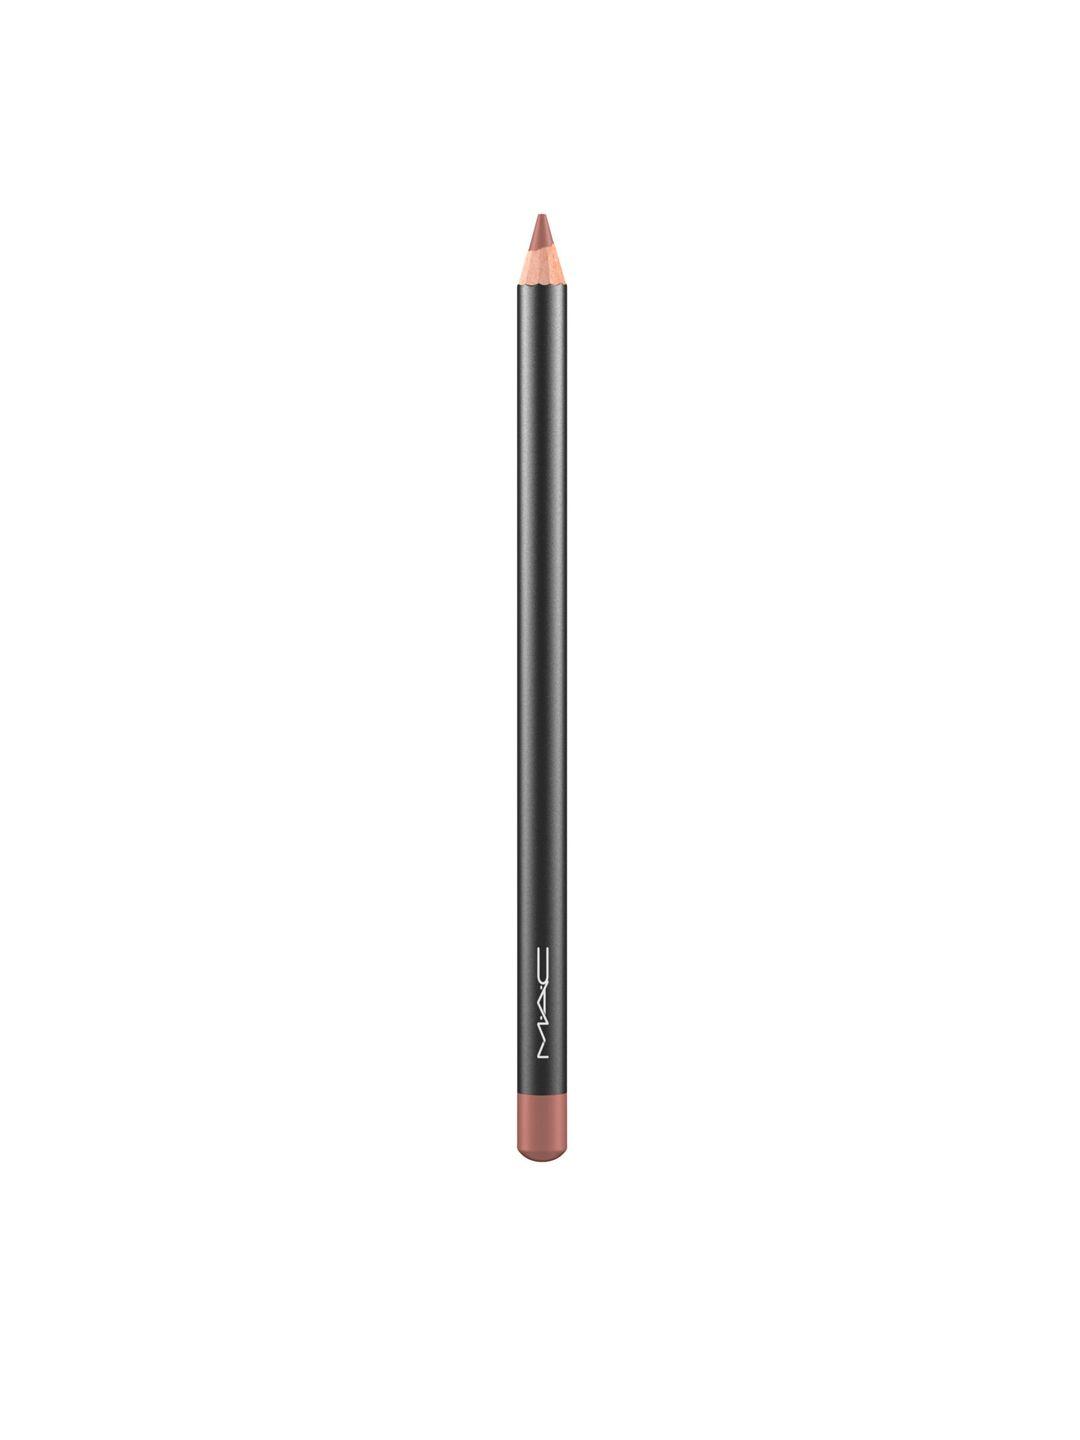 m.a.c longwear tansfer proof lip liner pencil - spice 1.45 g